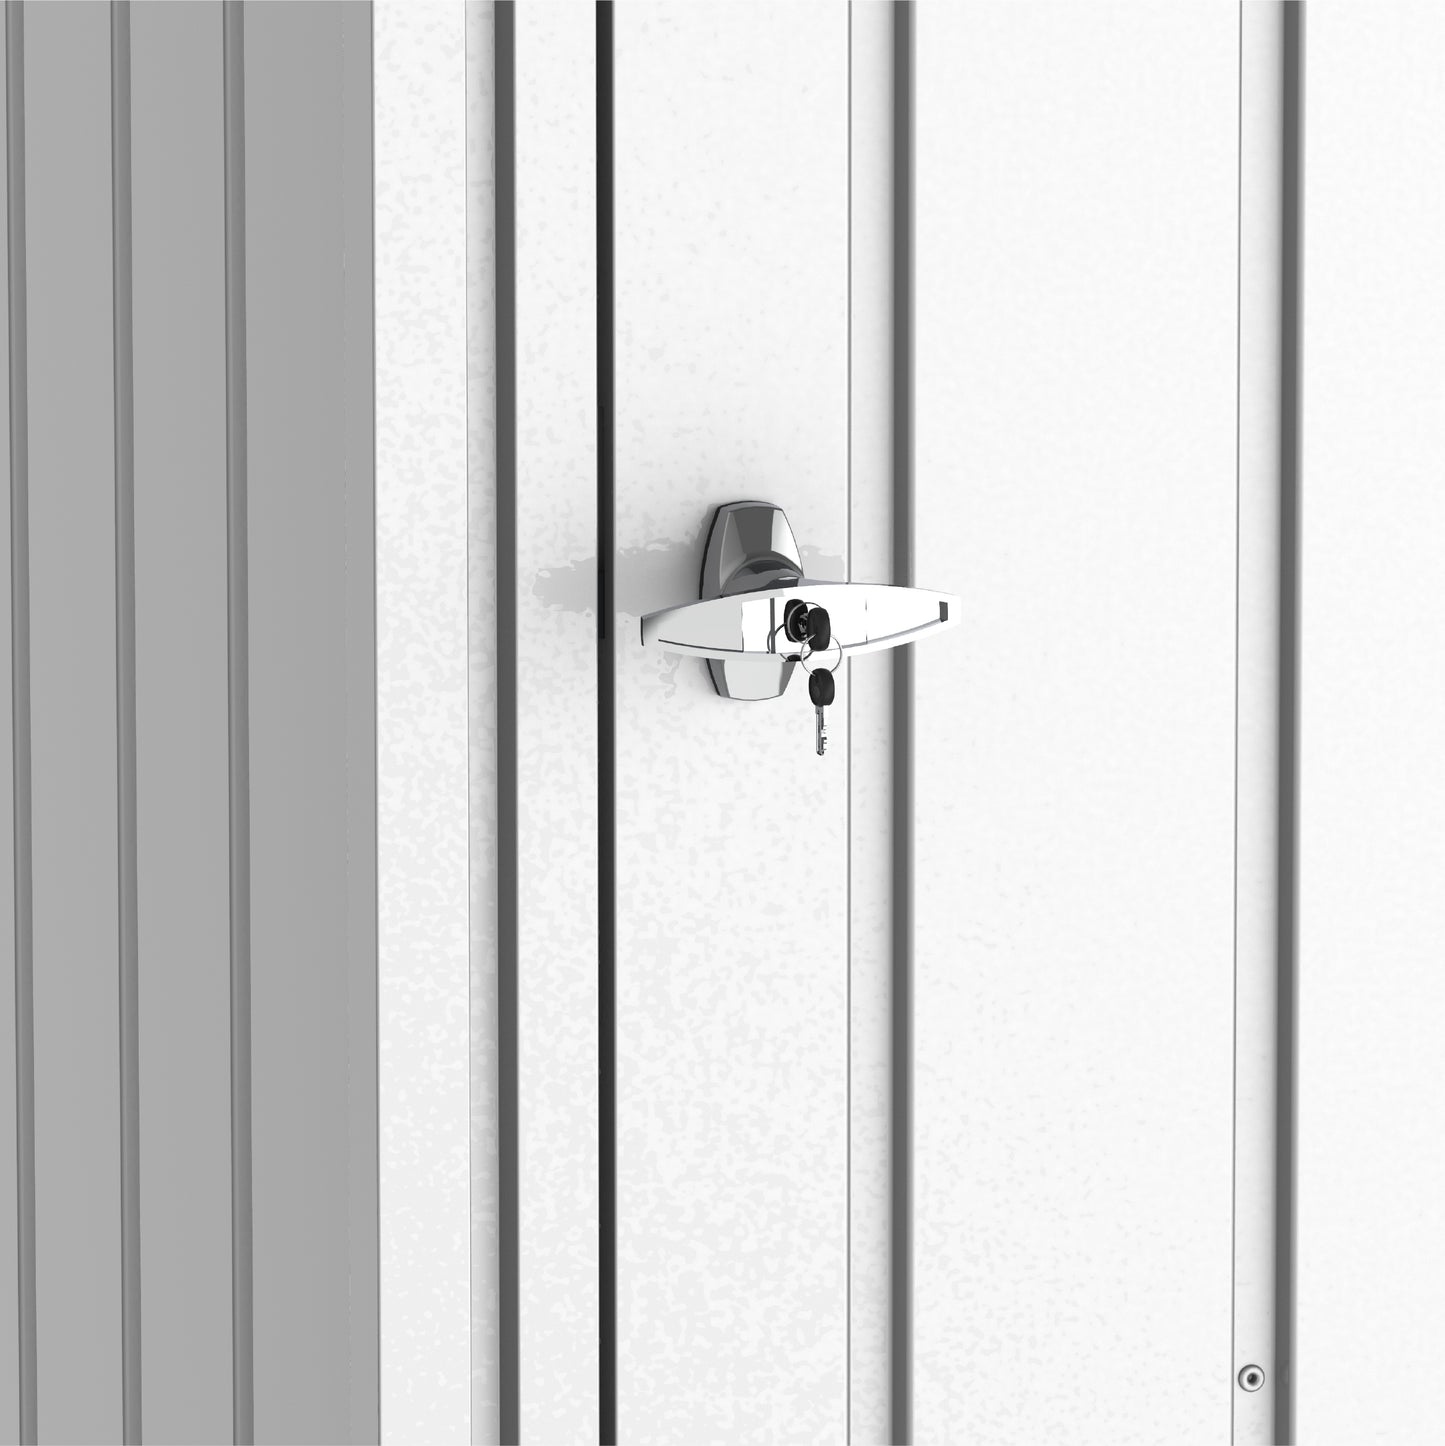 Palladium Steel High Store Lockers Single Door Cabinets